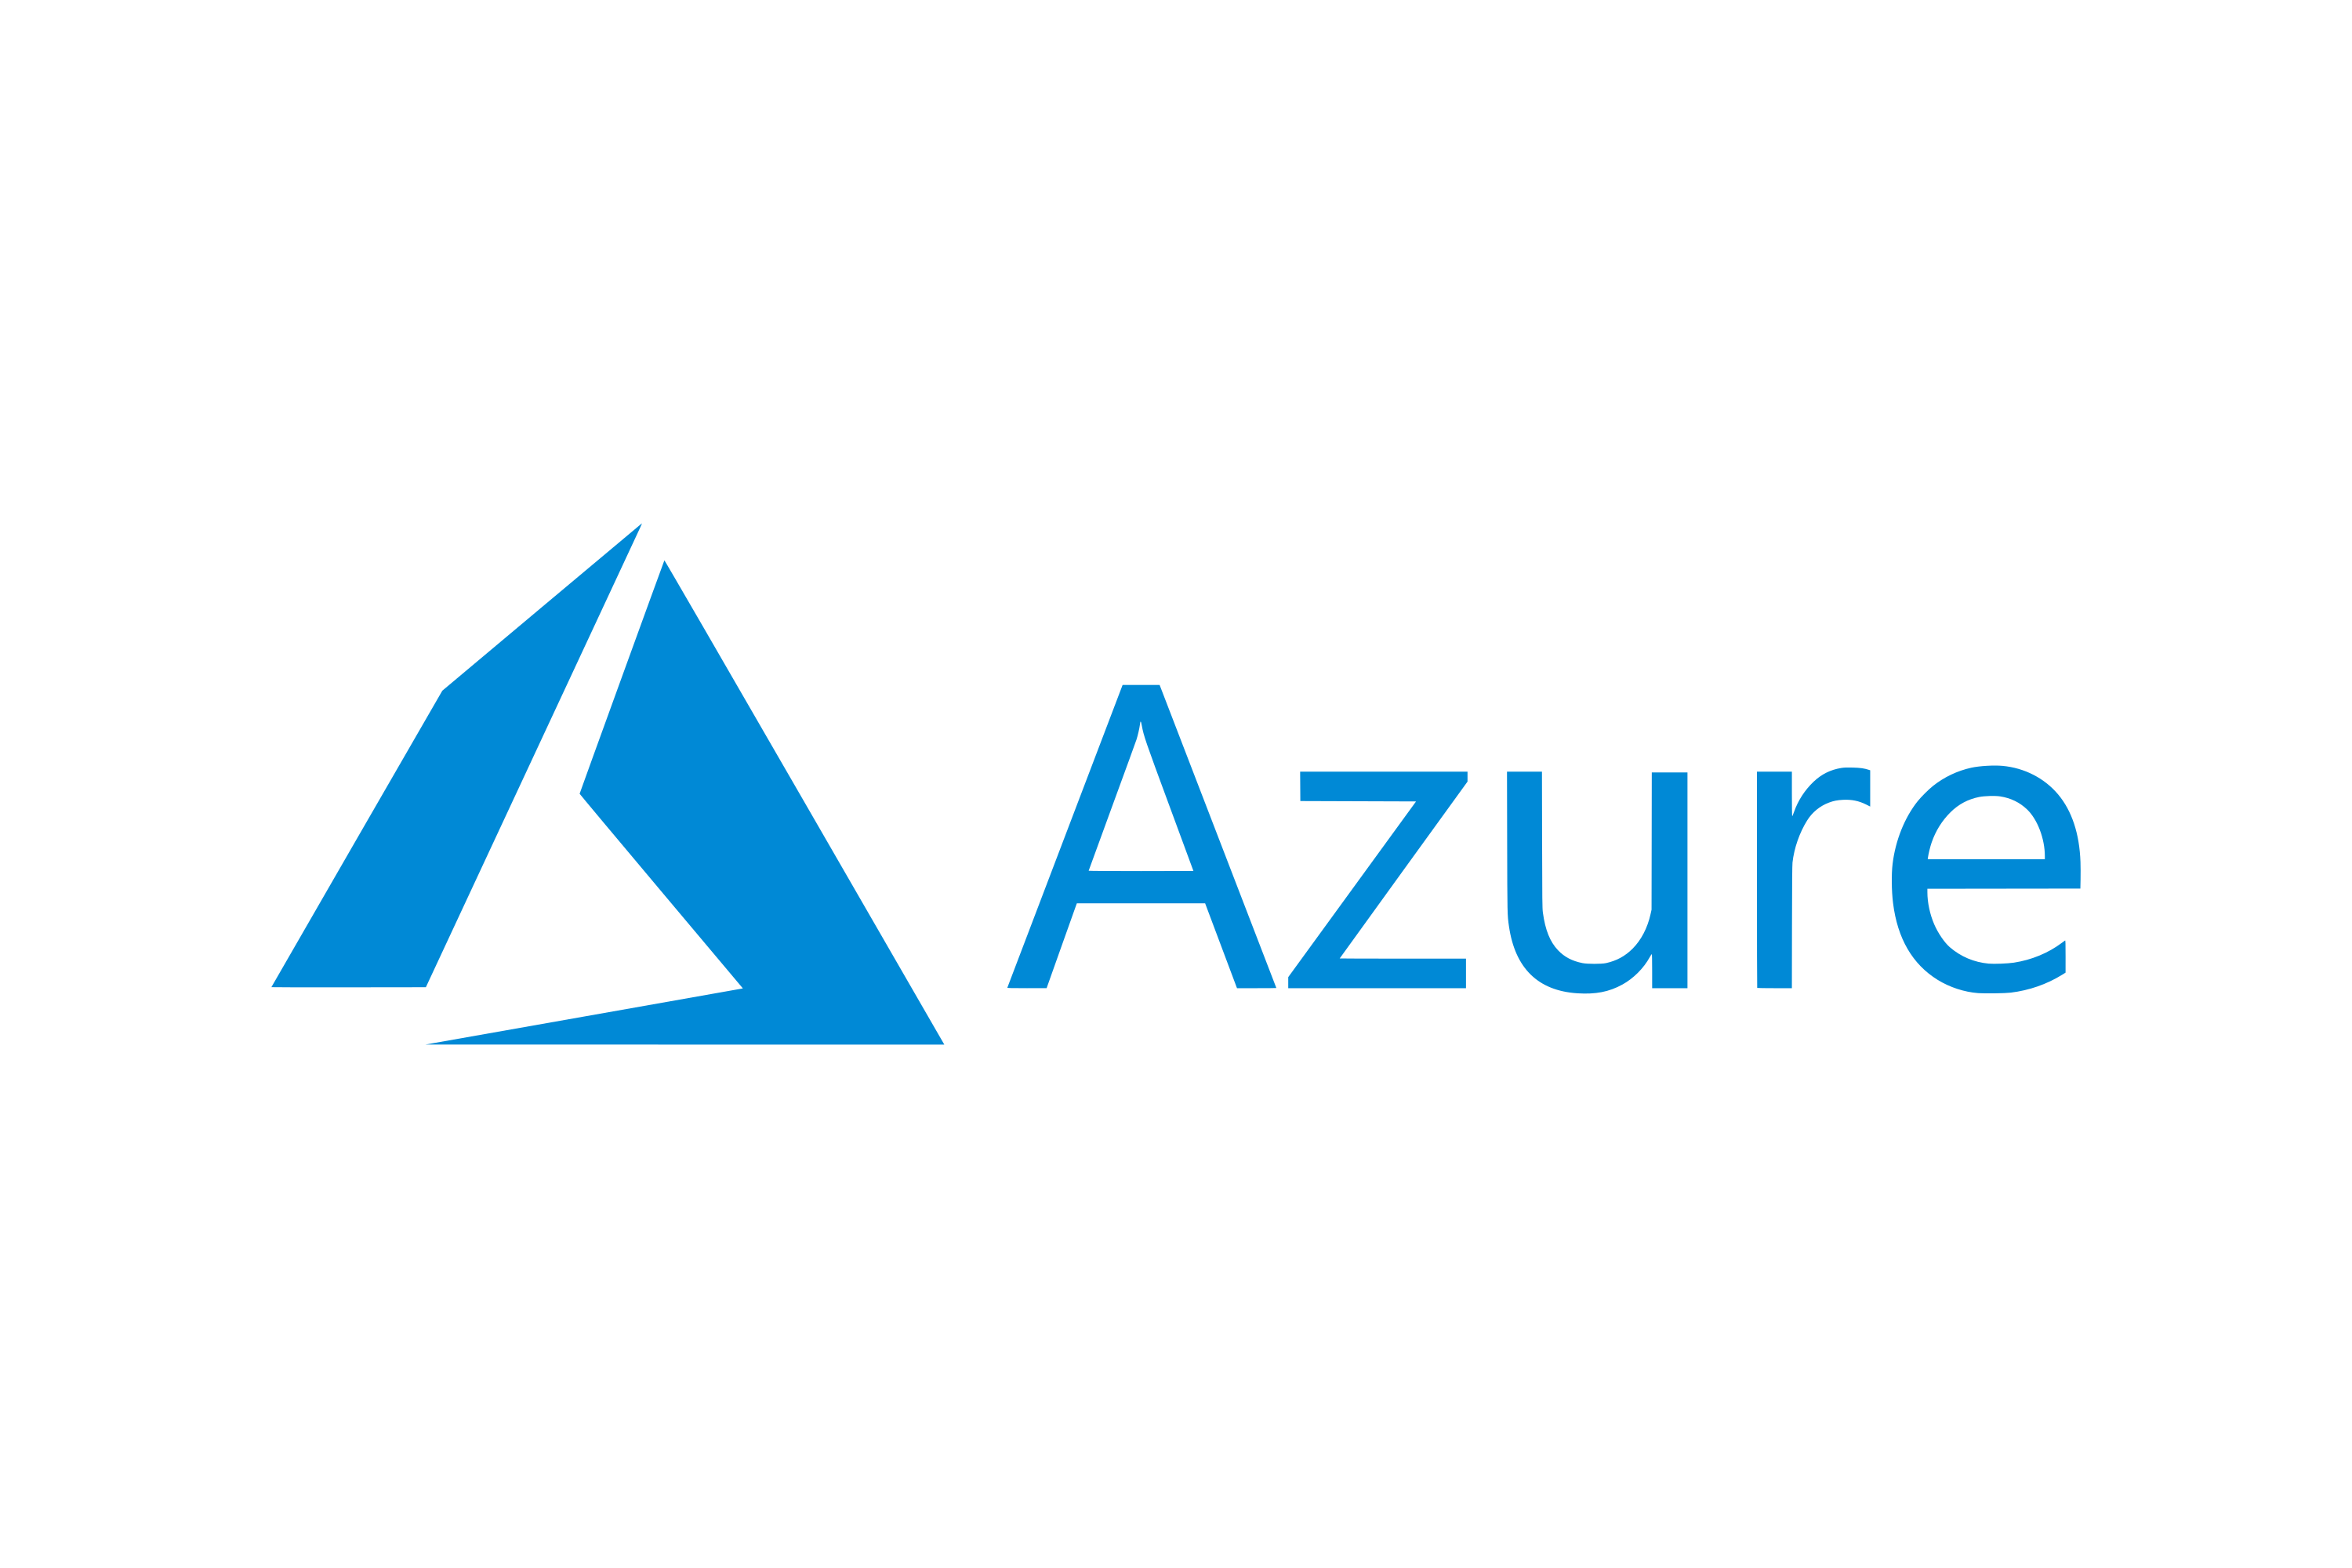 Microsoft Azure Logo Free Download Logo In Svg Or Png Format